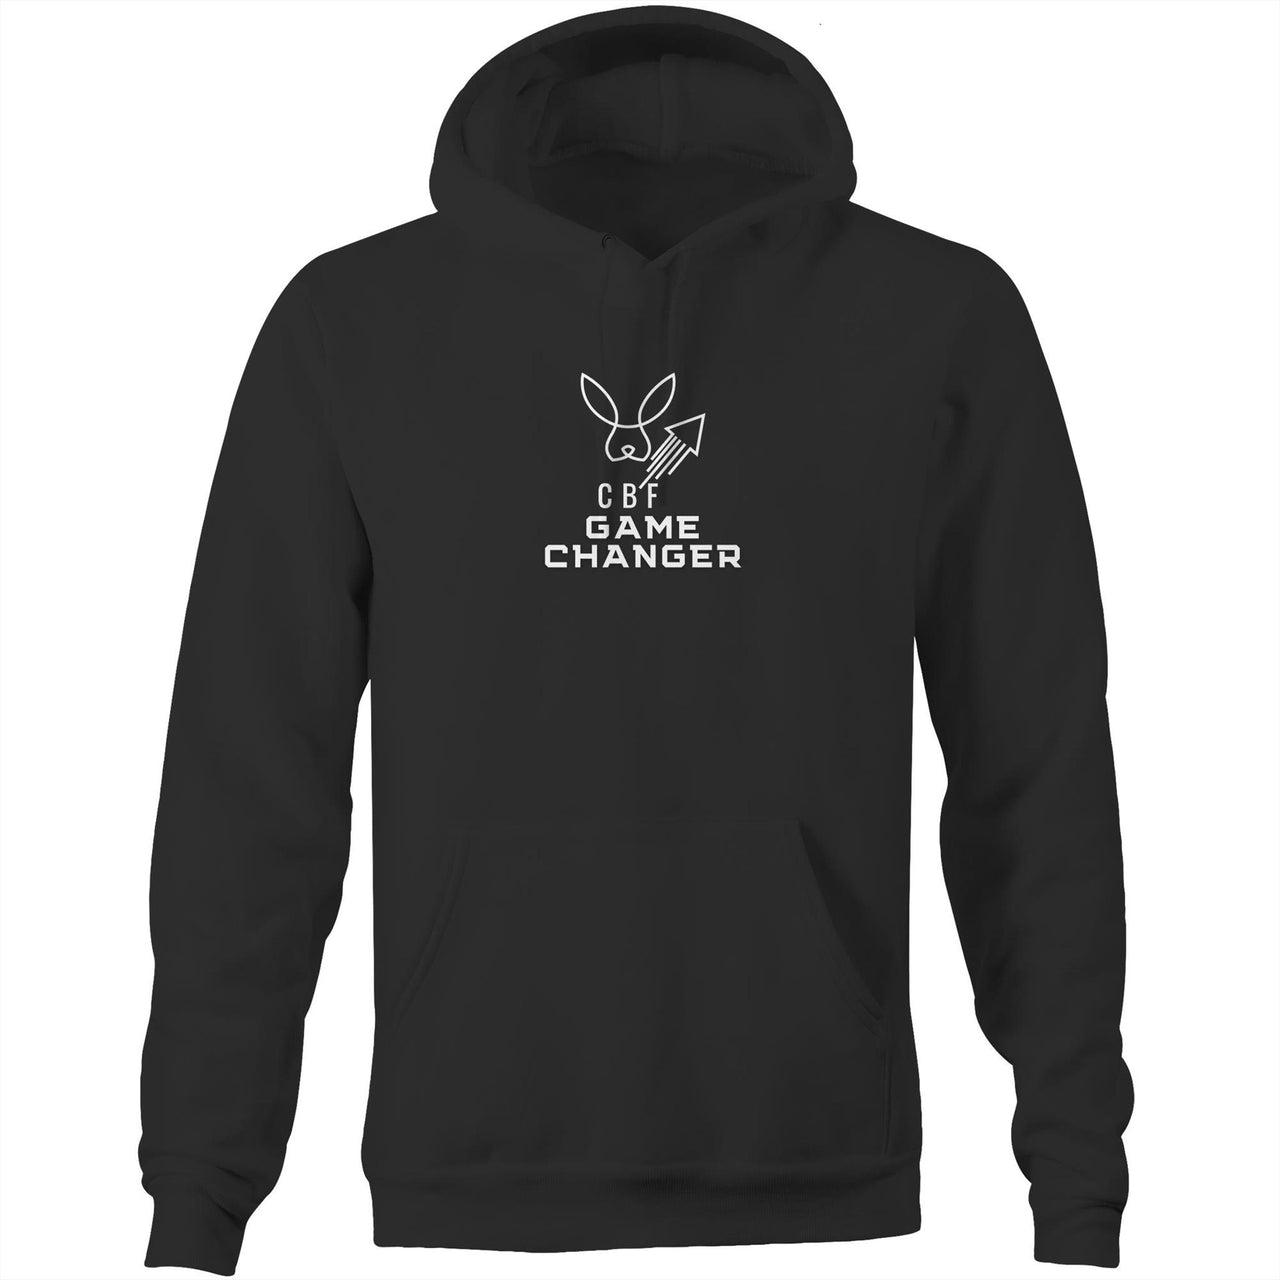 CBF Game Changer Rocket Pocket Hoodie Sweatshirt Black by CBF Clothing